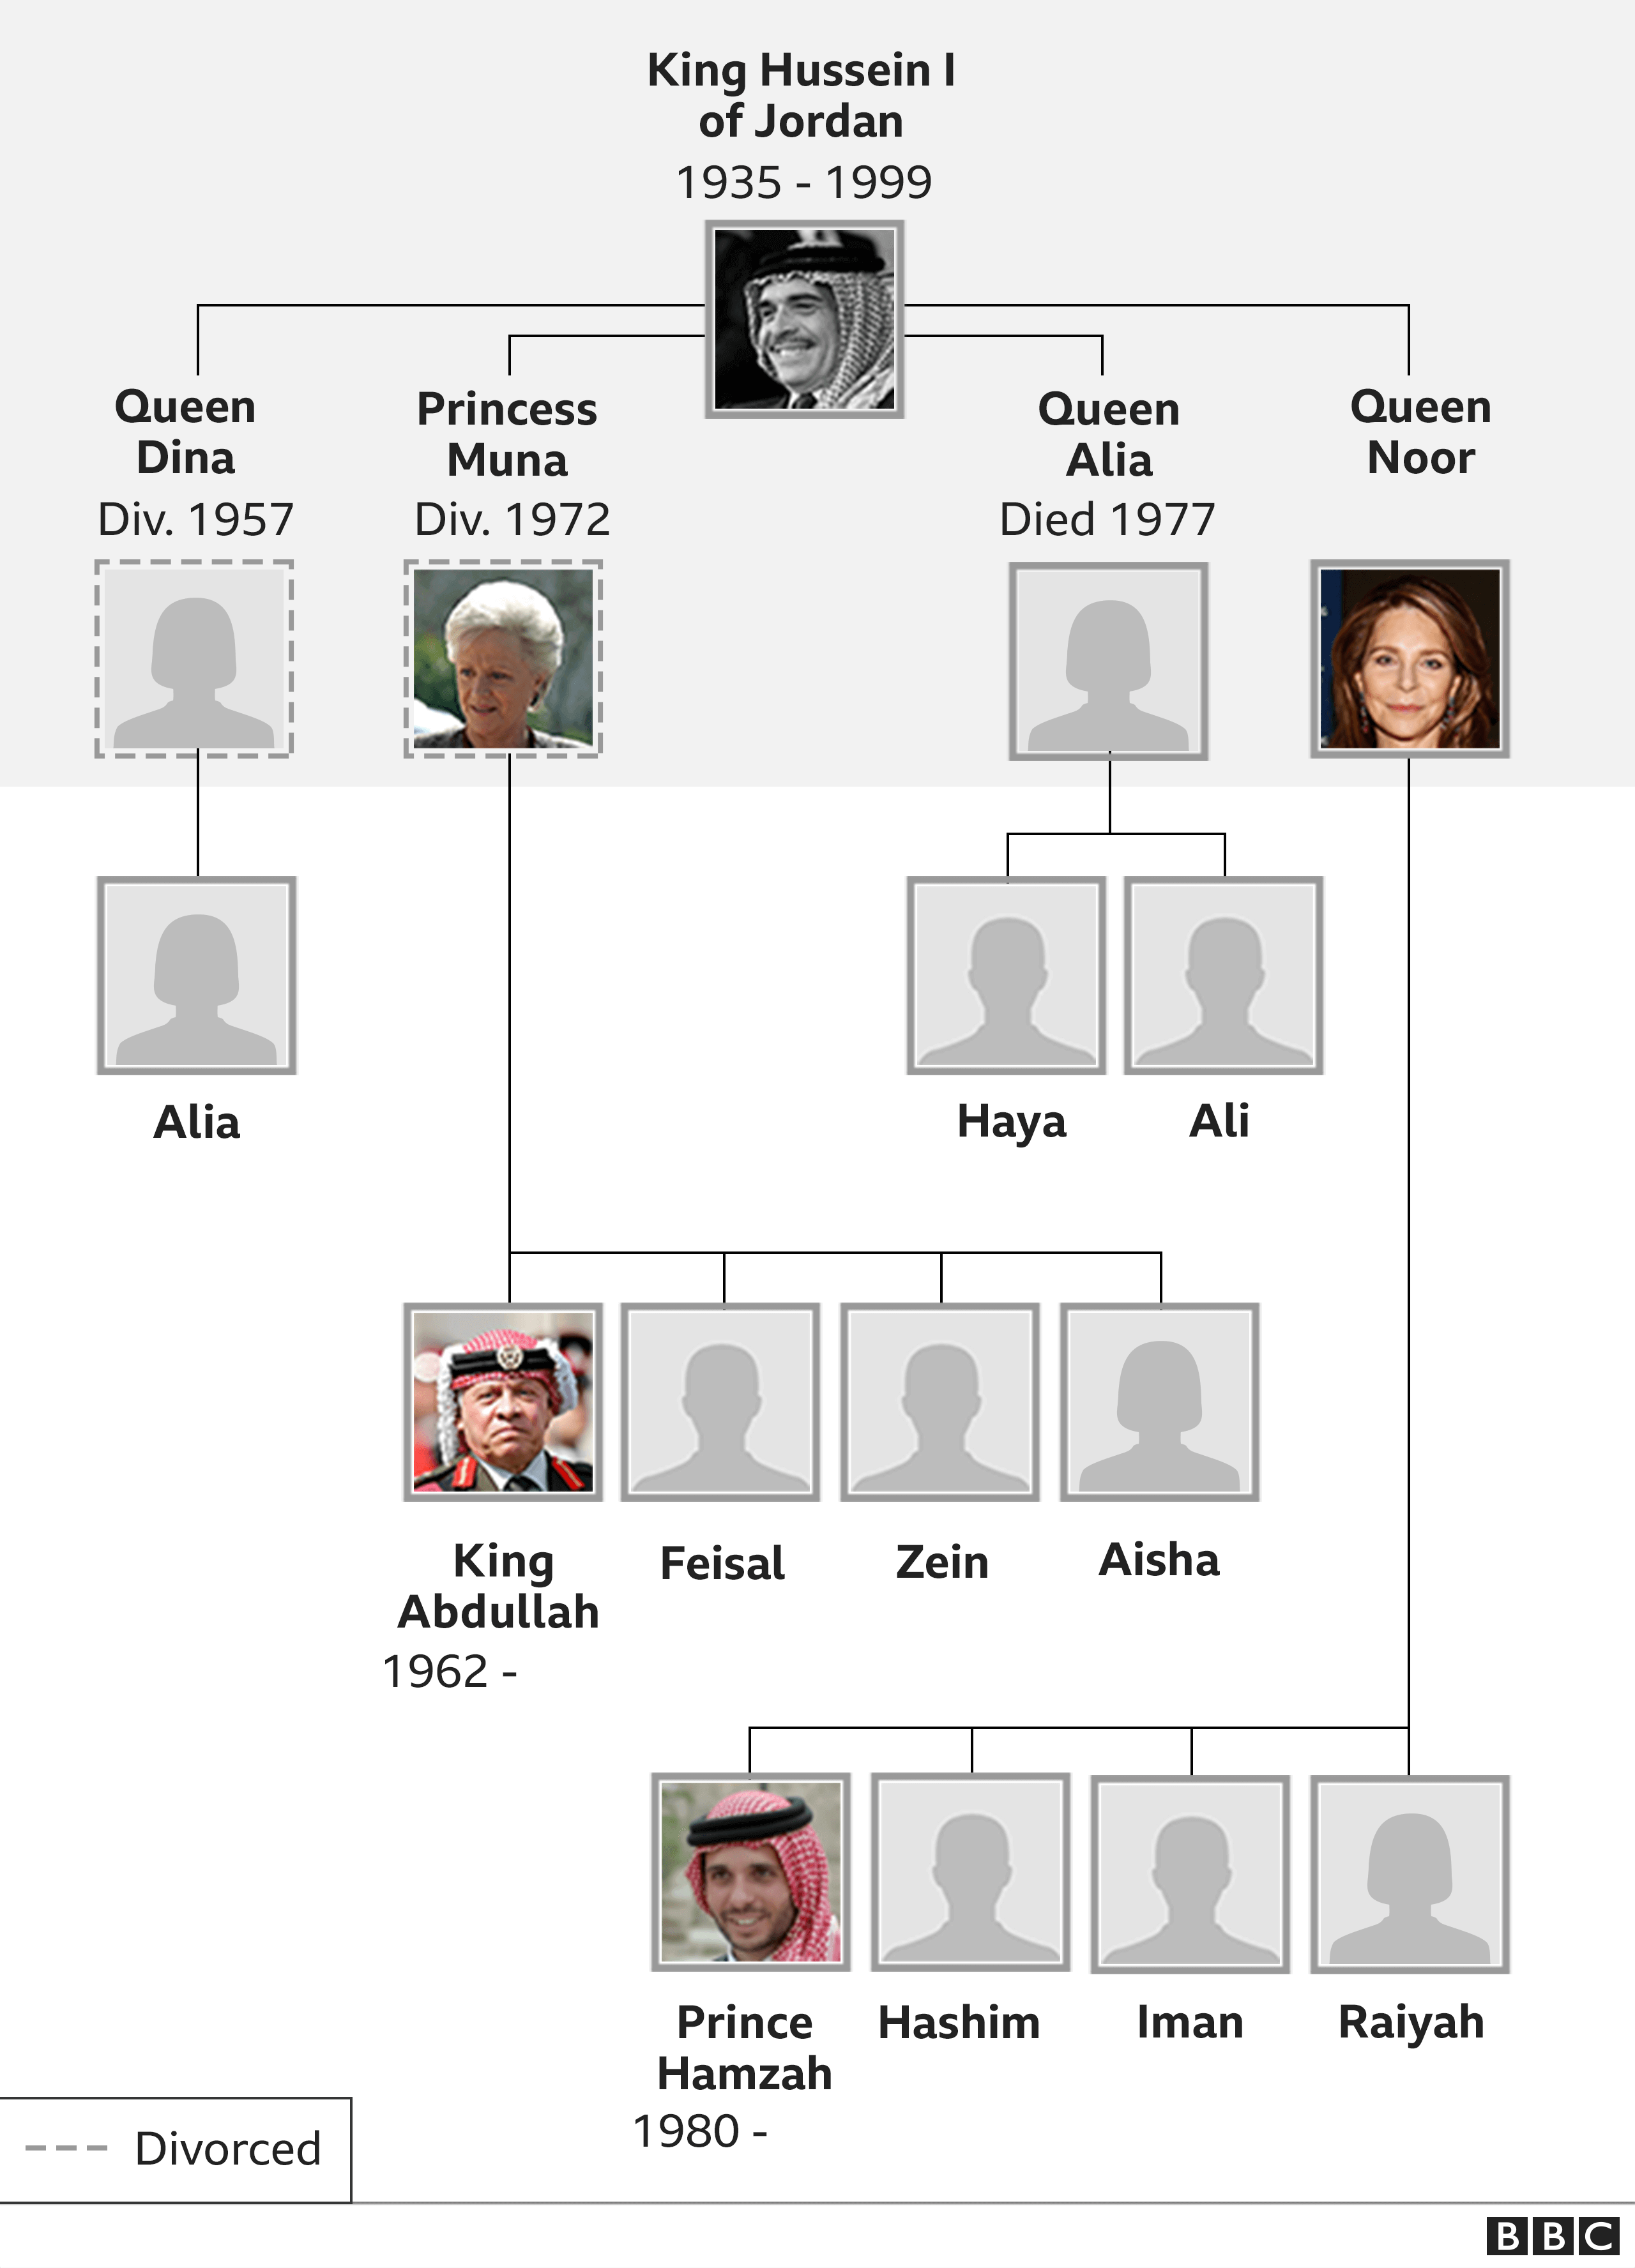 Family tree showing Jordan's royal family